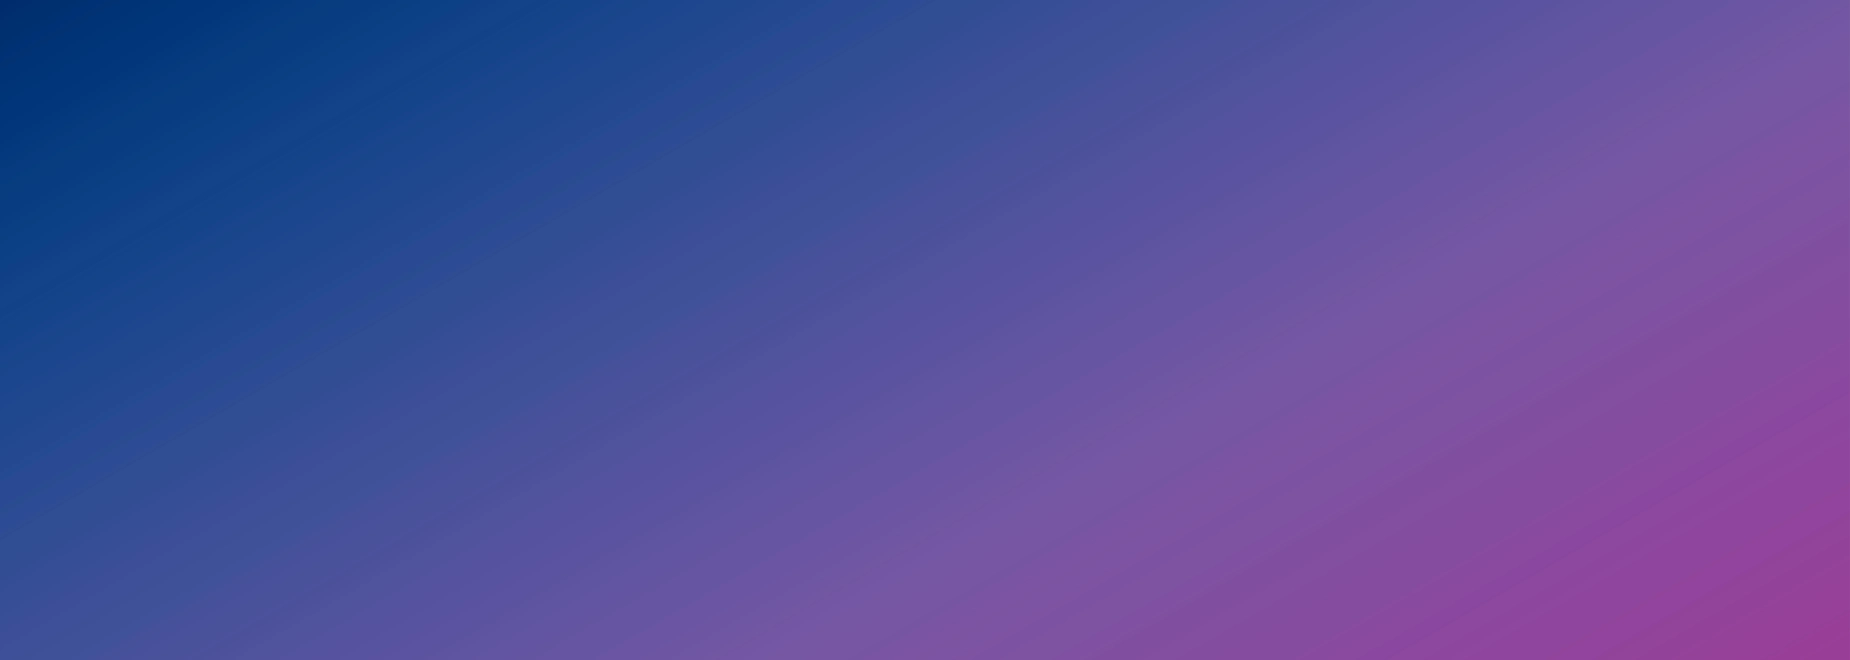 Blue to violet gradient background